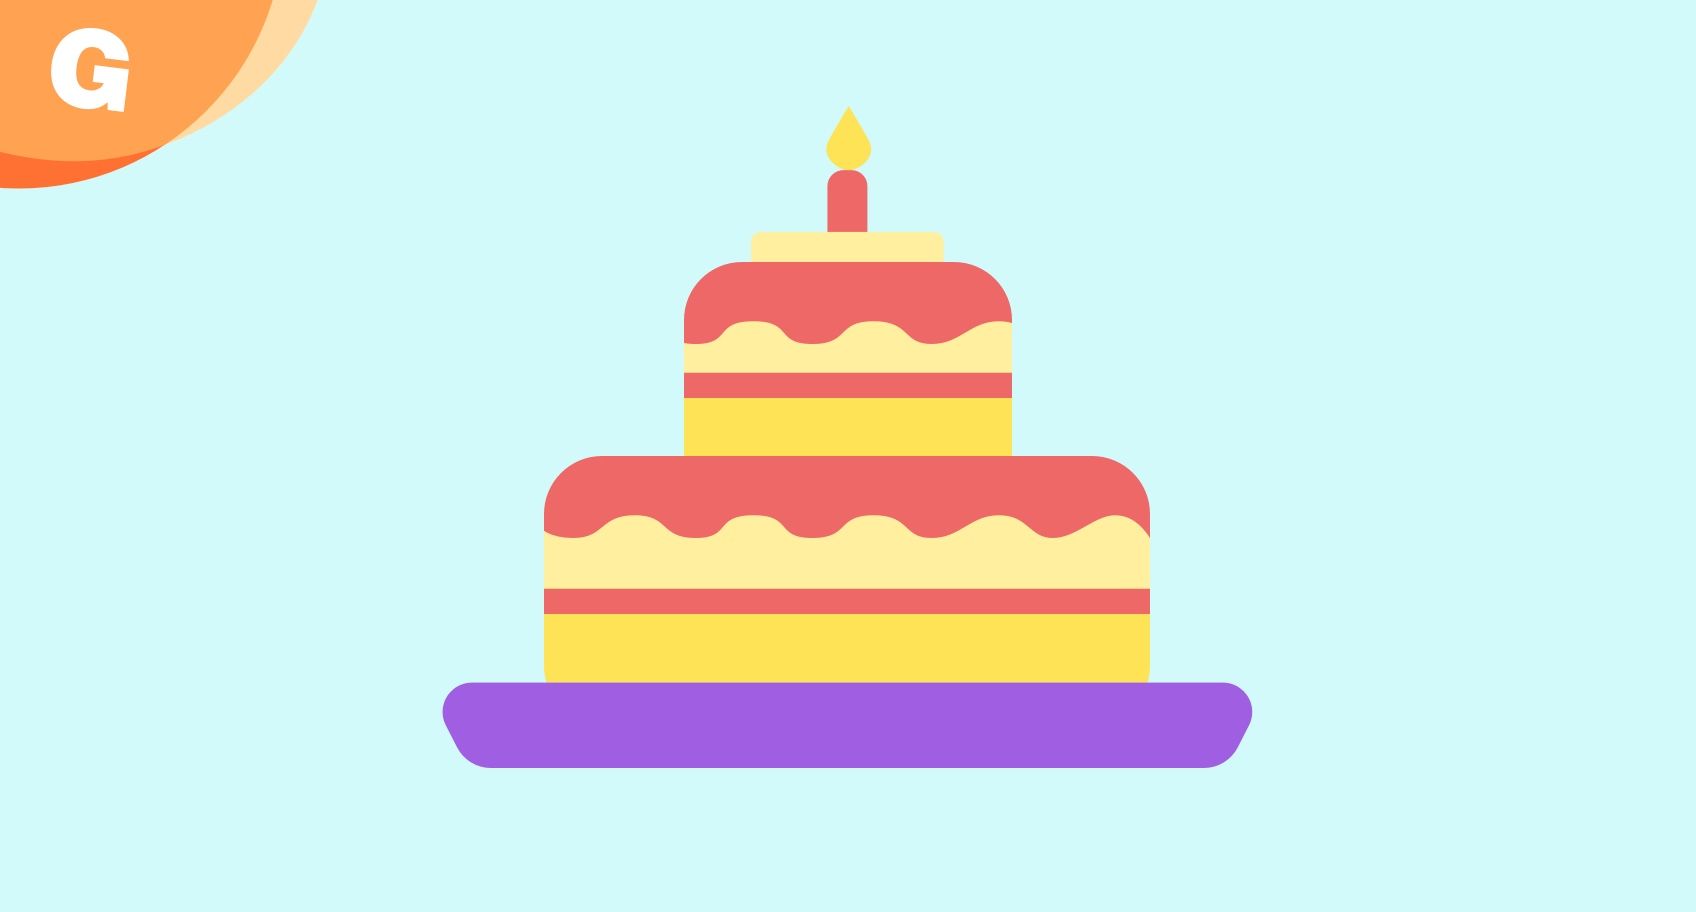 Virtual Birthday Cakes GIFs | Tenor